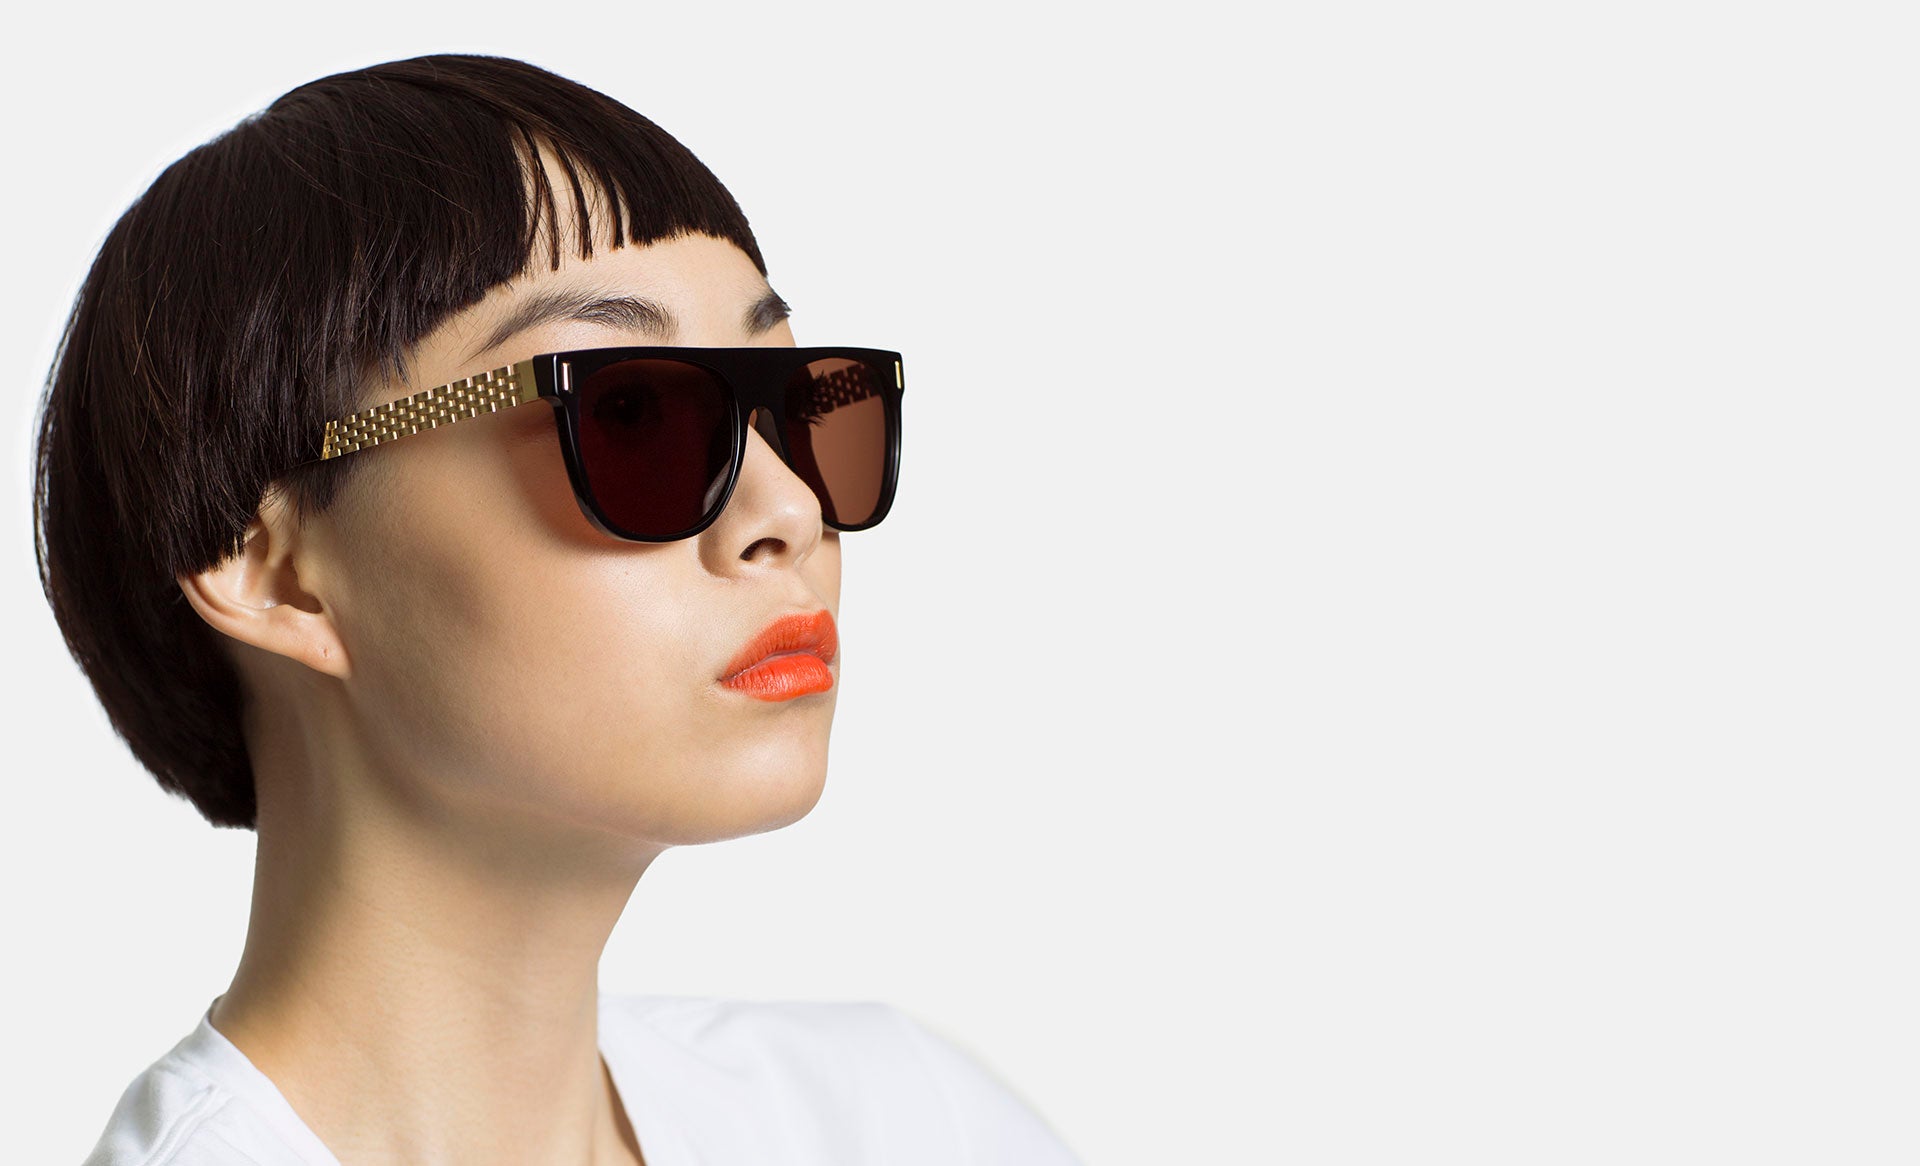 Retro Super Future Flat Top sunglasses at Paris Fashion Week